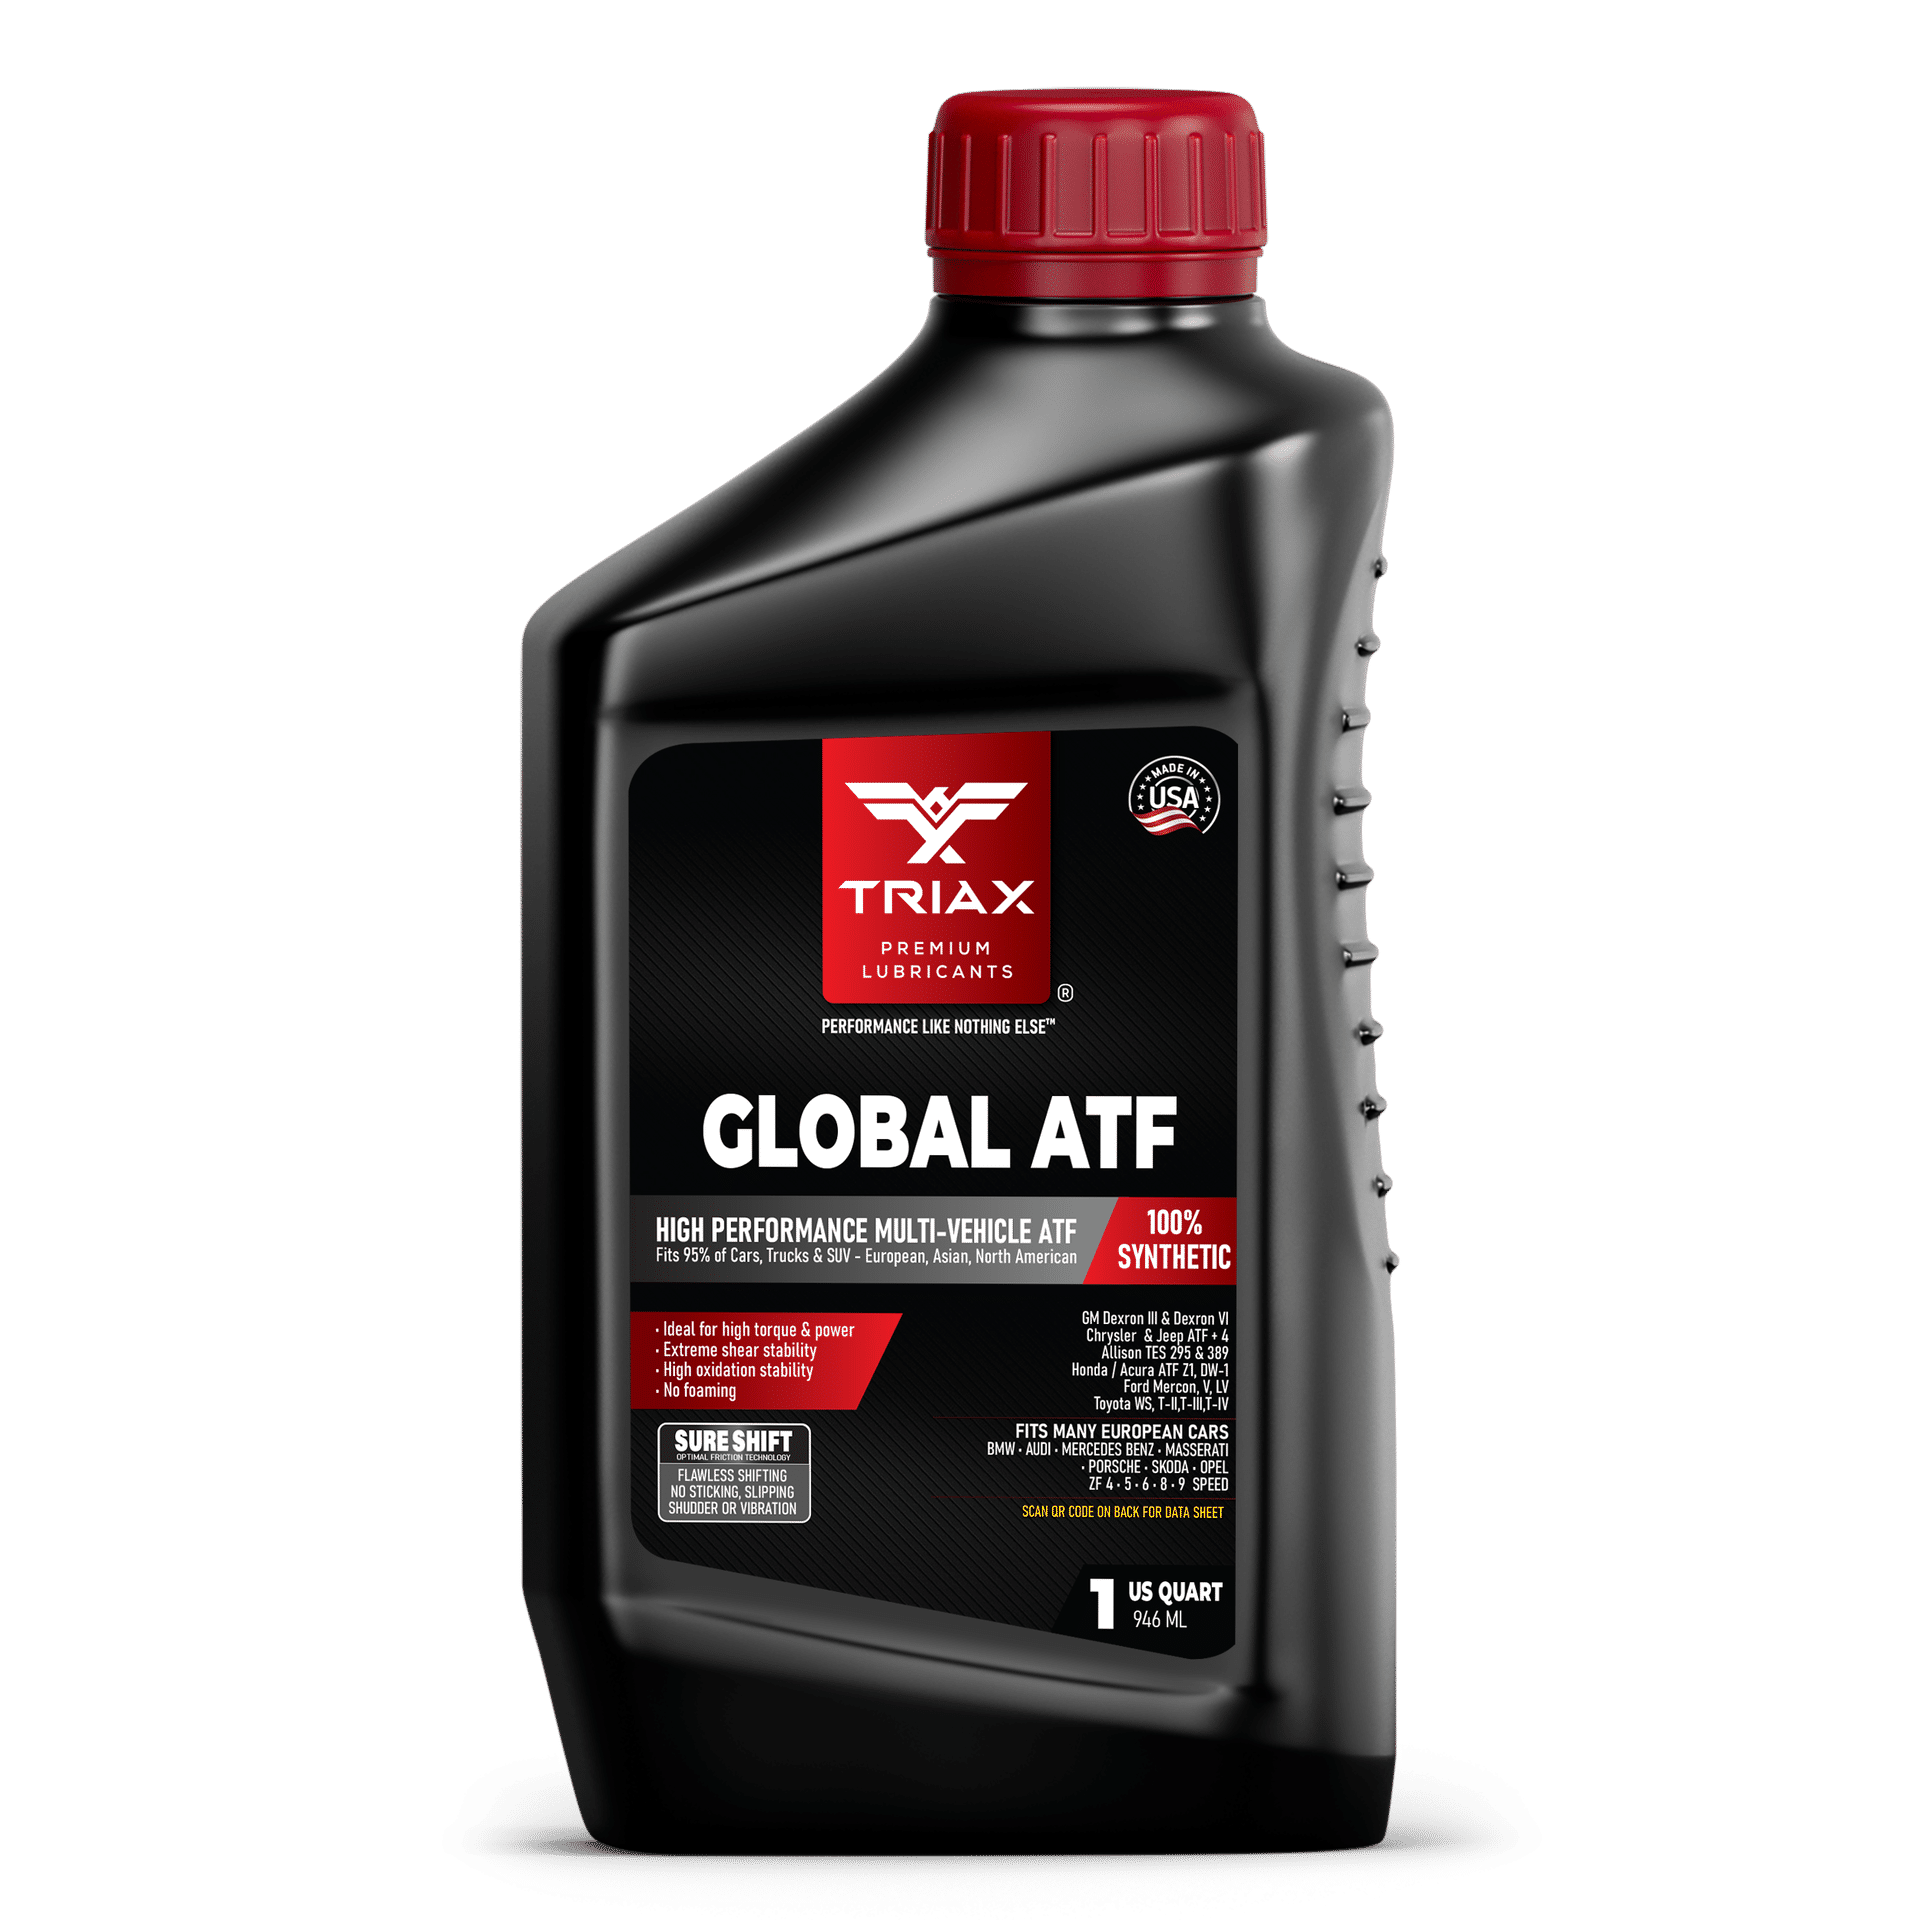 TRIAX GLOBAL ATF